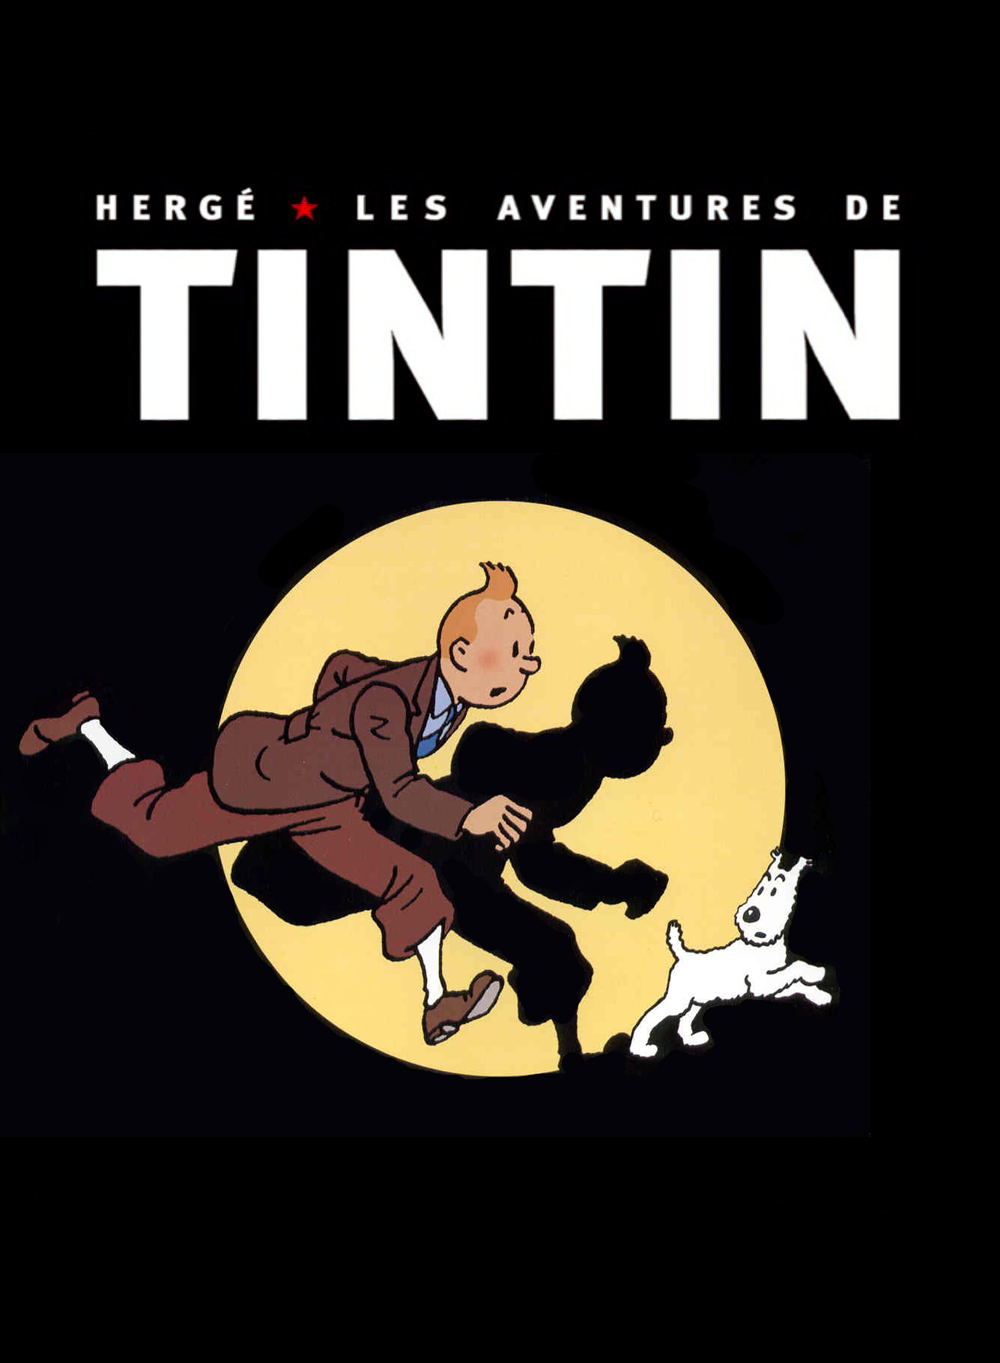 Les aventures de Tintin - Dessin animé (1991) - SensCritique